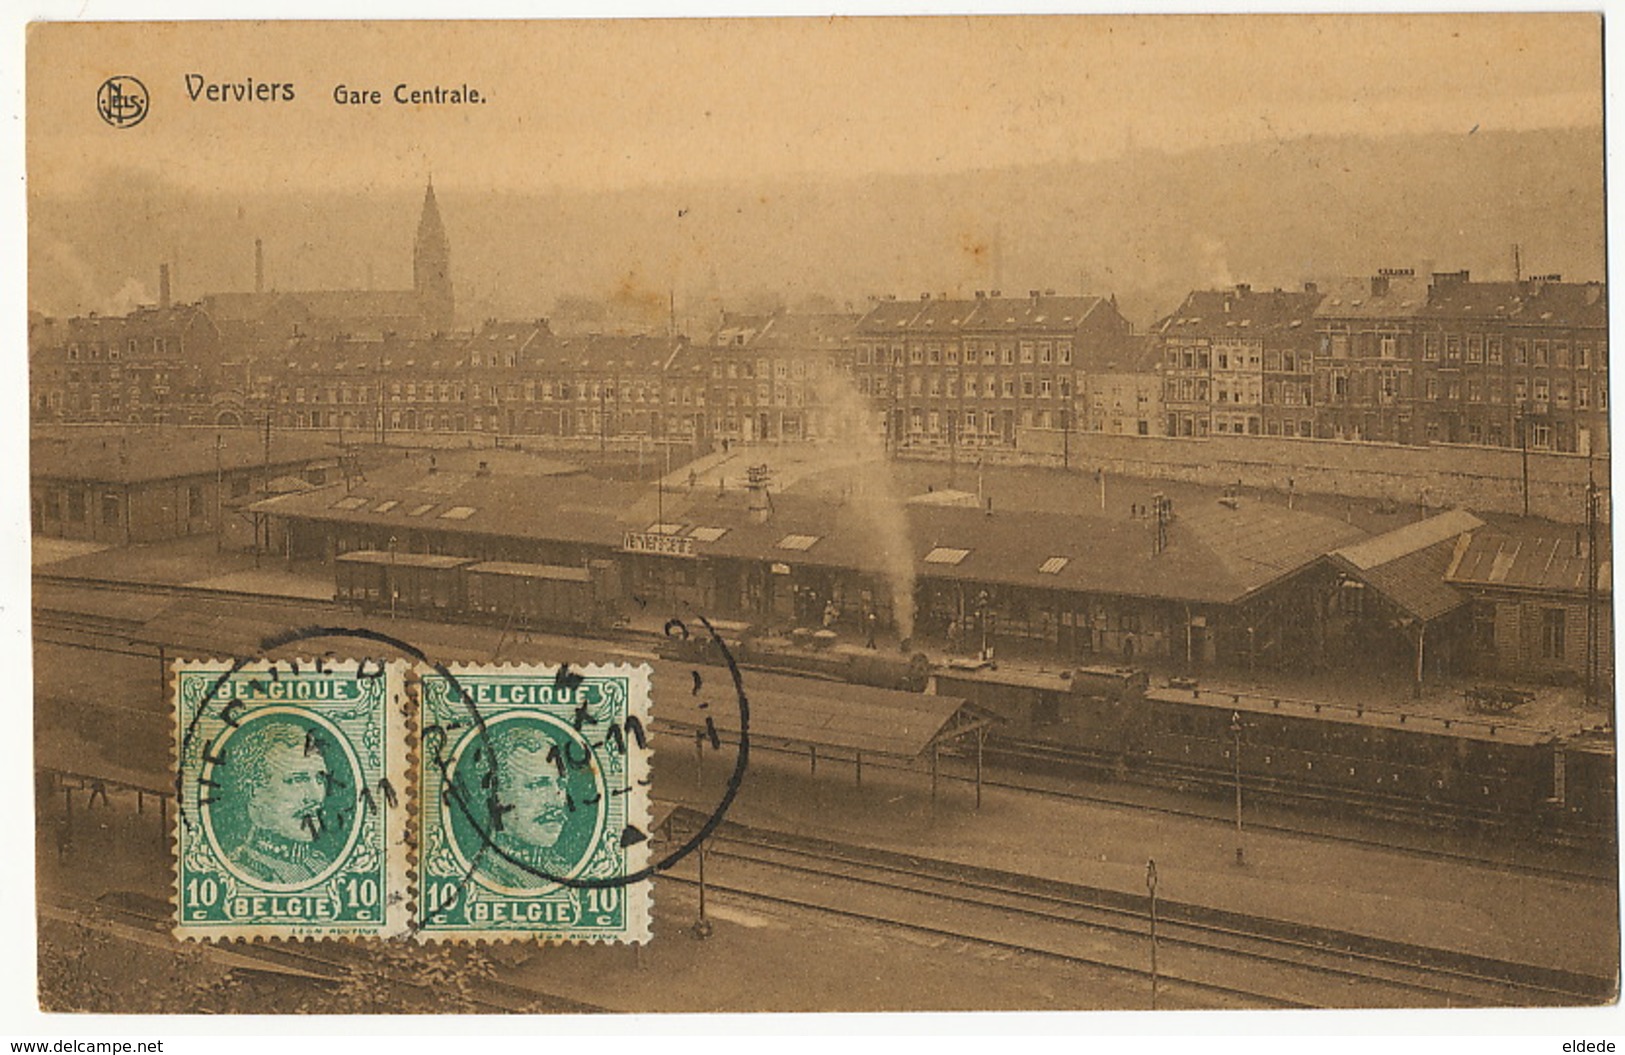 Verviers Gare Centrale Station Nels P. Used H. Marcowitz Deltiology Postcard Club To Guantanamo Cuba - Verviers